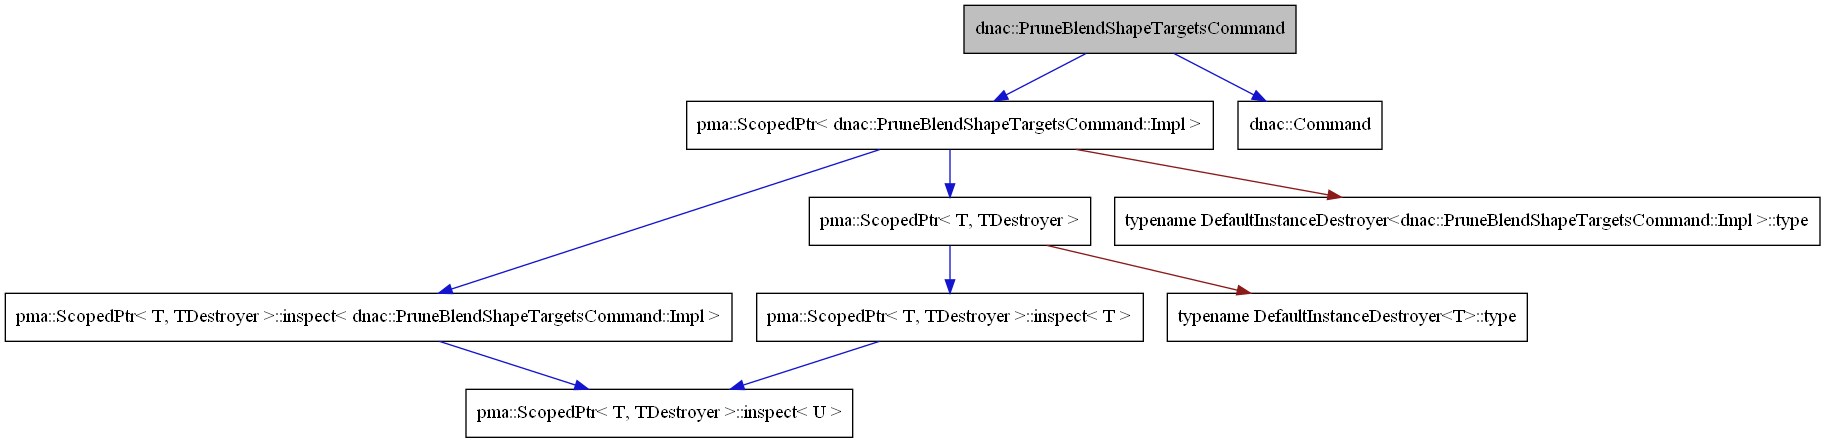 digraph {
    graph [bgcolor="#00000000"]
    node [shape=rectangle style=filled fillcolor="#FFFFFF" font=Helvetica padding=2]
    edge [color="#1414CE"]
    "3" [label="pma::ScopedPtr< dnac::PruneBlendShapeTargetsCommand::Impl >" tooltip="pma::ScopedPtr< dnac::PruneBlendShapeTargetsCommand::Impl >"]
    "2" [label="dnac::Command" tooltip="dnac::Command"]
    "1" [label="dnac::PruneBlendShapeTargetsCommand" tooltip="dnac::PruneBlendShapeTargetsCommand" fillcolor="#BFBFBF"]
    "9" [label="pma::ScopedPtr< T, TDestroyer >::inspect< T >" tooltip="pma::ScopedPtr< T, TDestroyer >::inspect< T >"]
    "5" [label="pma::ScopedPtr< T, TDestroyer >::inspect< dnac::PruneBlendShapeTargetsCommand::Impl >" tooltip="pma::ScopedPtr< T, TDestroyer >::inspect< dnac::PruneBlendShapeTargetsCommand::Impl >"]
    "7" [label="pma::ScopedPtr< T, TDestroyer >" tooltip="pma::ScopedPtr< T, TDestroyer >"]
    "6" [label="pma::ScopedPtr< T, TDestroyer >::inspect< U >" tooltip="pma::ScopedPtr< T, TDestroyer >::inspect< U >"]
    "8" [label="typename DefaultInstanceDestroyer<T>::type" tooltip="typename DefaultInstanceDestroyer<T>::type"]
    "4" [label="typename DefaultInstanceDestroyer<dnac::PruneBlendShapeTargetsCommand::Impl >::type" tooltip="typename DefaultInstanceDestroyer<dnac::PruneBlendShapeTargetsCommand::Impl >::type"]
    "3" -> "4" [dir=forward tooltip="private-inheritance" color="#8B1A1A"]
    "3" -> "5" [dir=forward tooltip="usage"]
    "3" -> "7" [dir=forward tooltip="template-instance"]
    "1" -> "2" [dir=forward tooltip="public-inheritance"]
    "1" -> "3" [dir=forward tooltip="usage"]
    "9" -> "6" [dir=forward tooltip="template-instance"]
    "5" -> "6" [dir=forward tooltip="template-instance"]
    "7" -> "8" [dir=forward tooltip="private-inheritance" color="#8B1A1A"]
    "7" -> "9" [dir=forward tooltip="usage"]
}